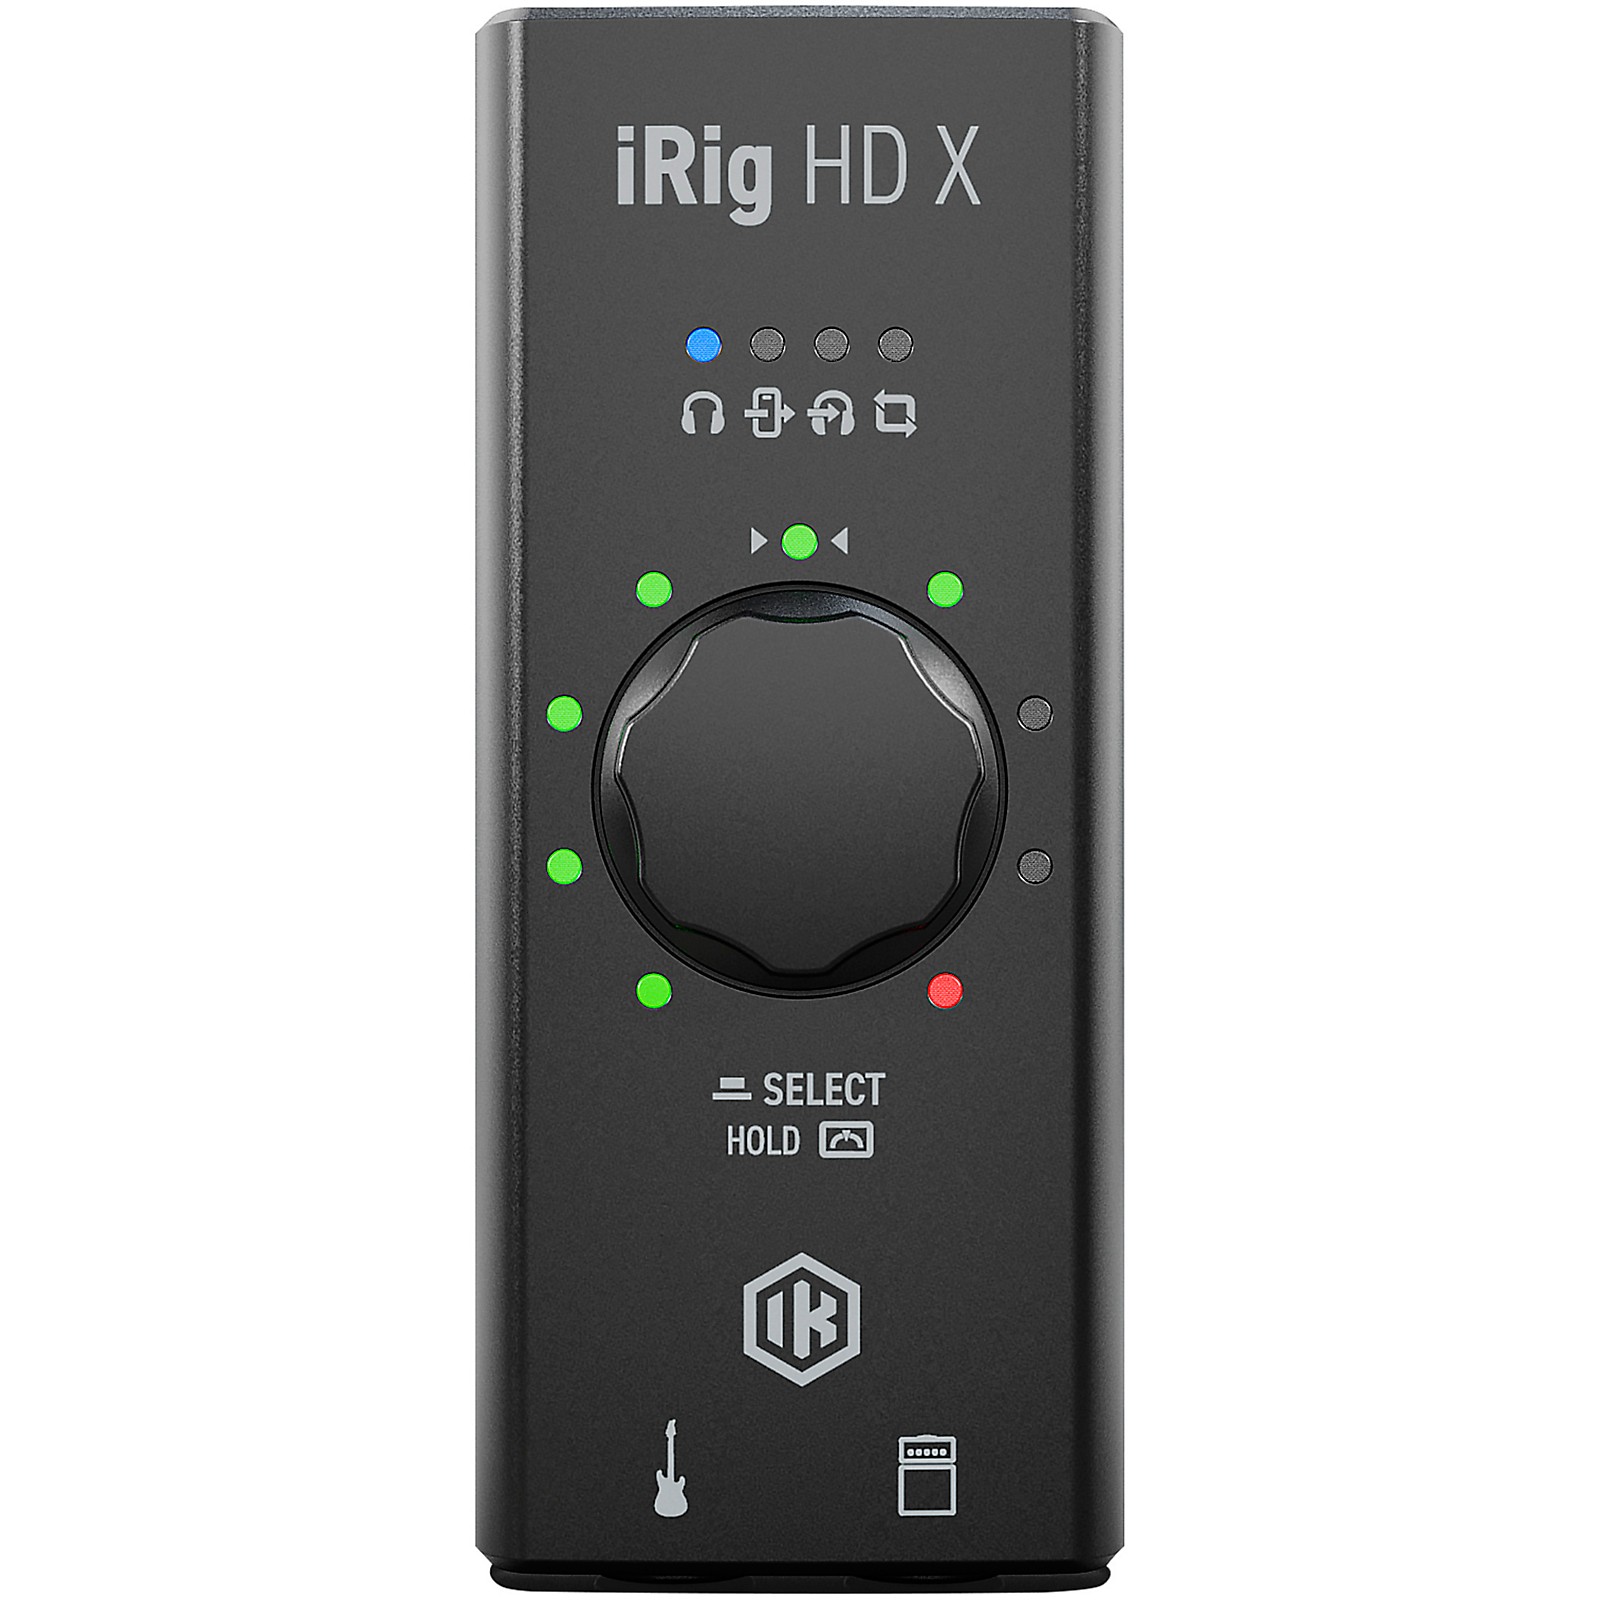 IK Multimedia releases iRig Stream Solo and iRig Stream Pro audio interfaces